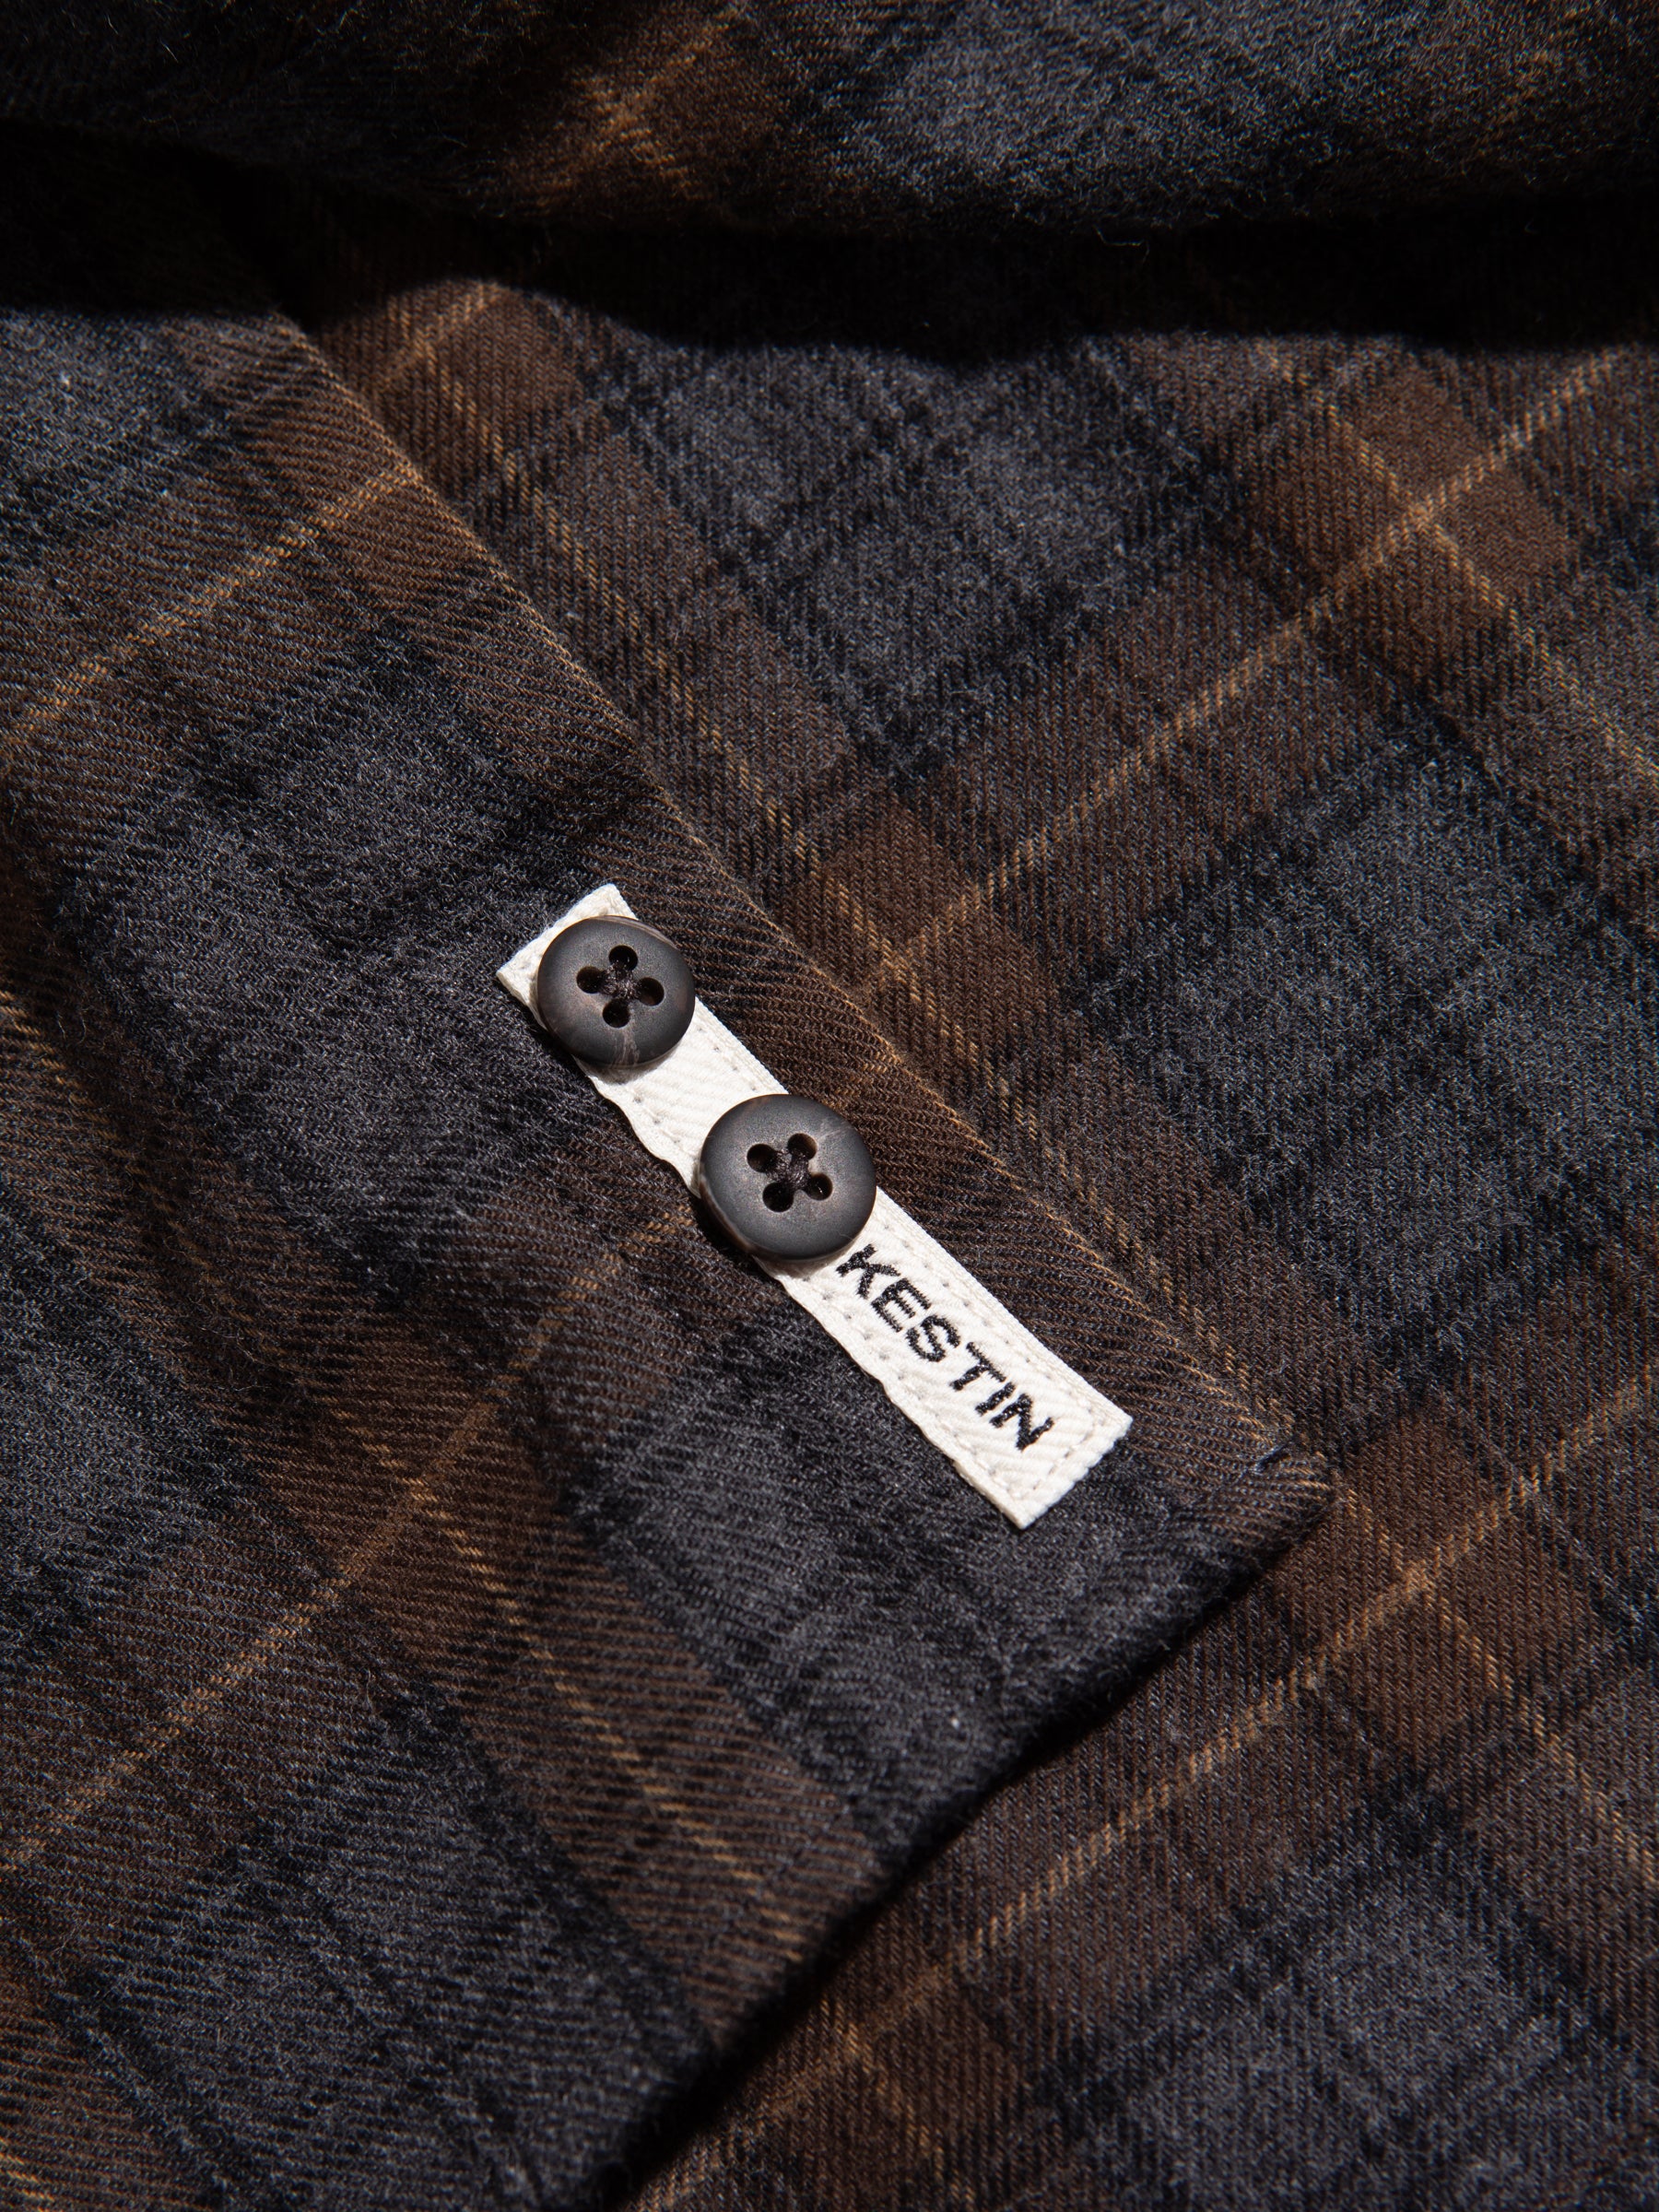 The woven placket label on the KESTIN Raeburn Button Down Shirt.